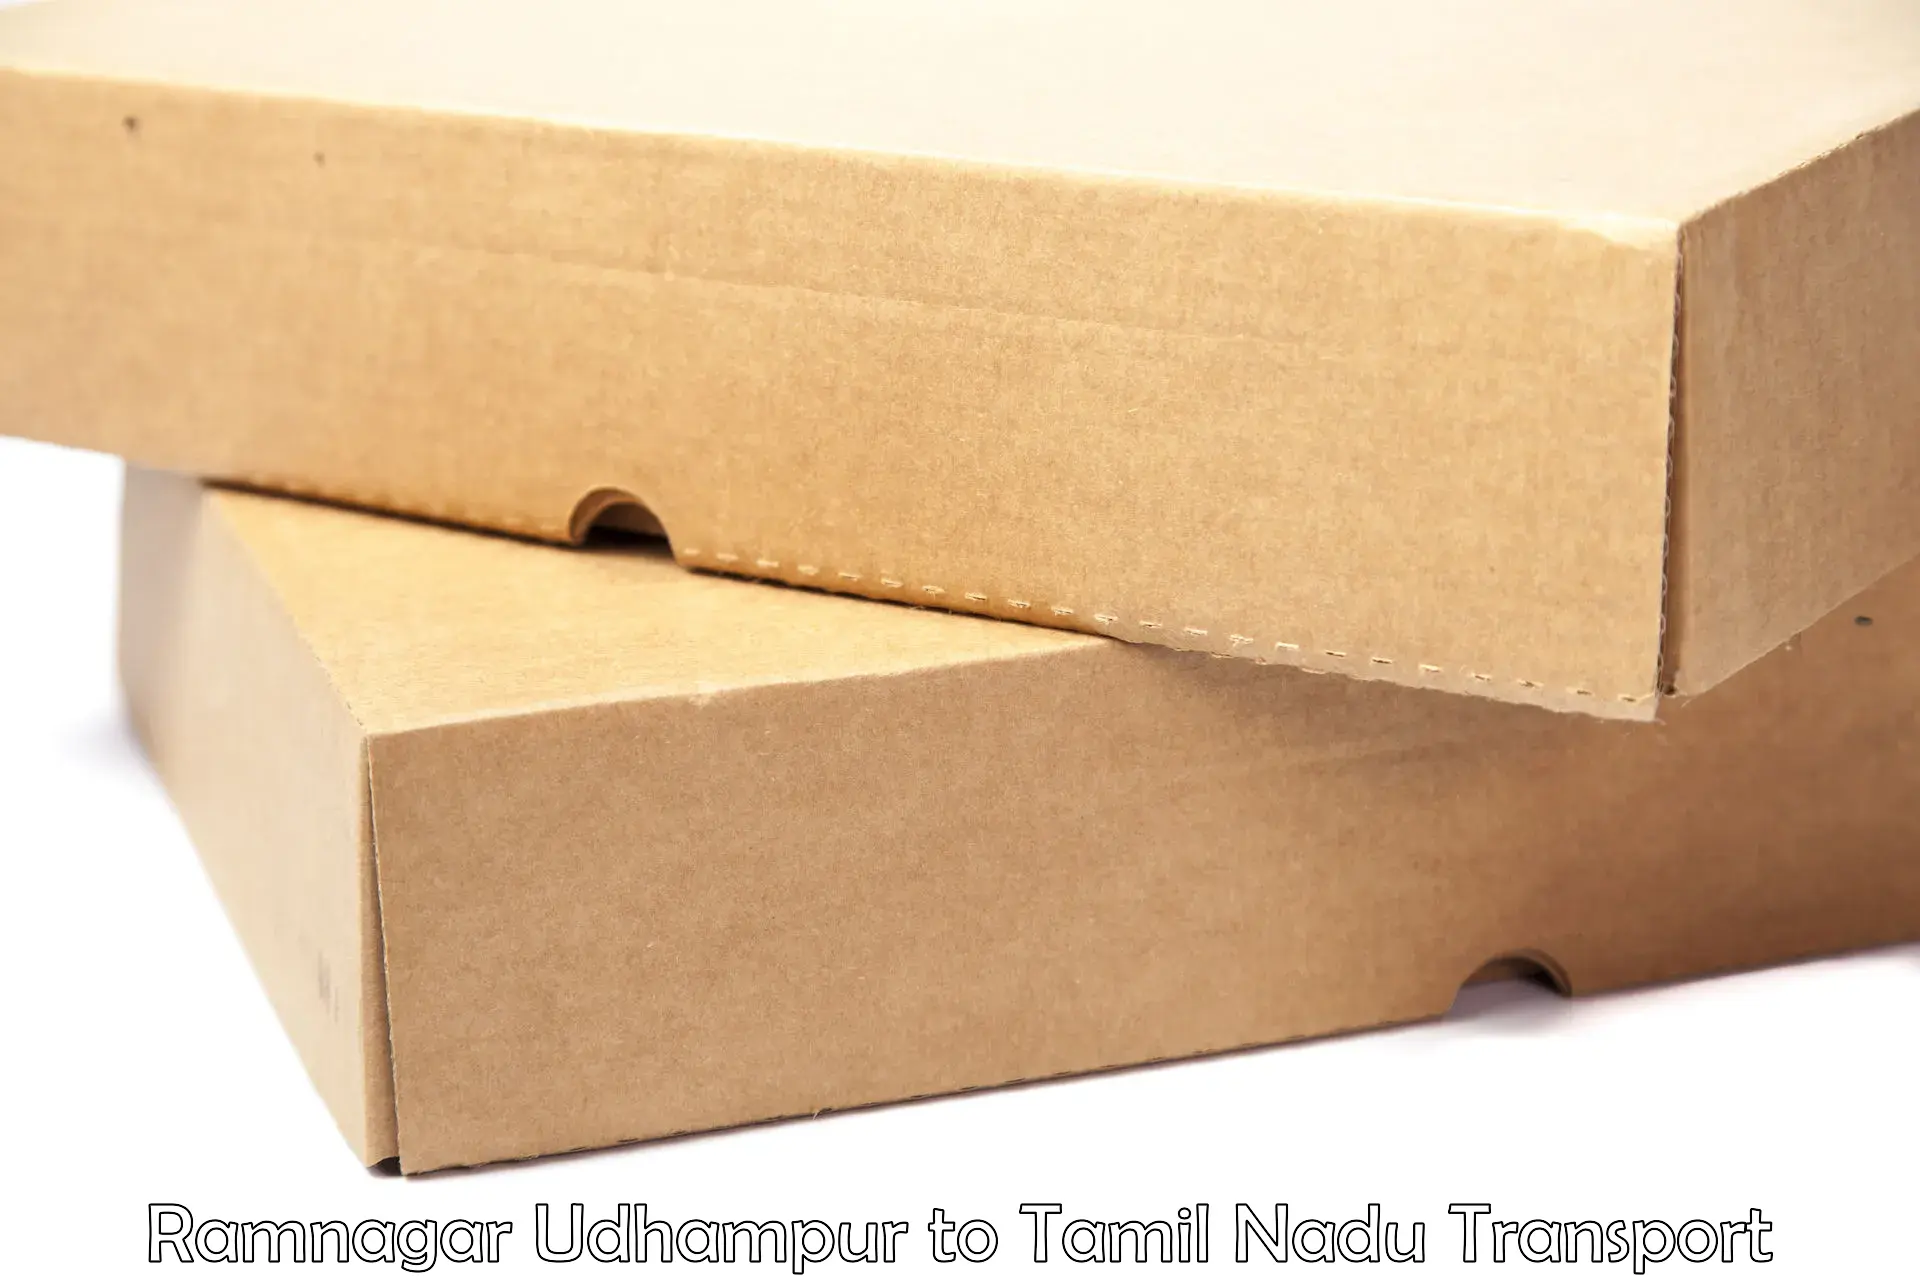 Shipping partner Ramnagar Udhampur to Tamil Nadu